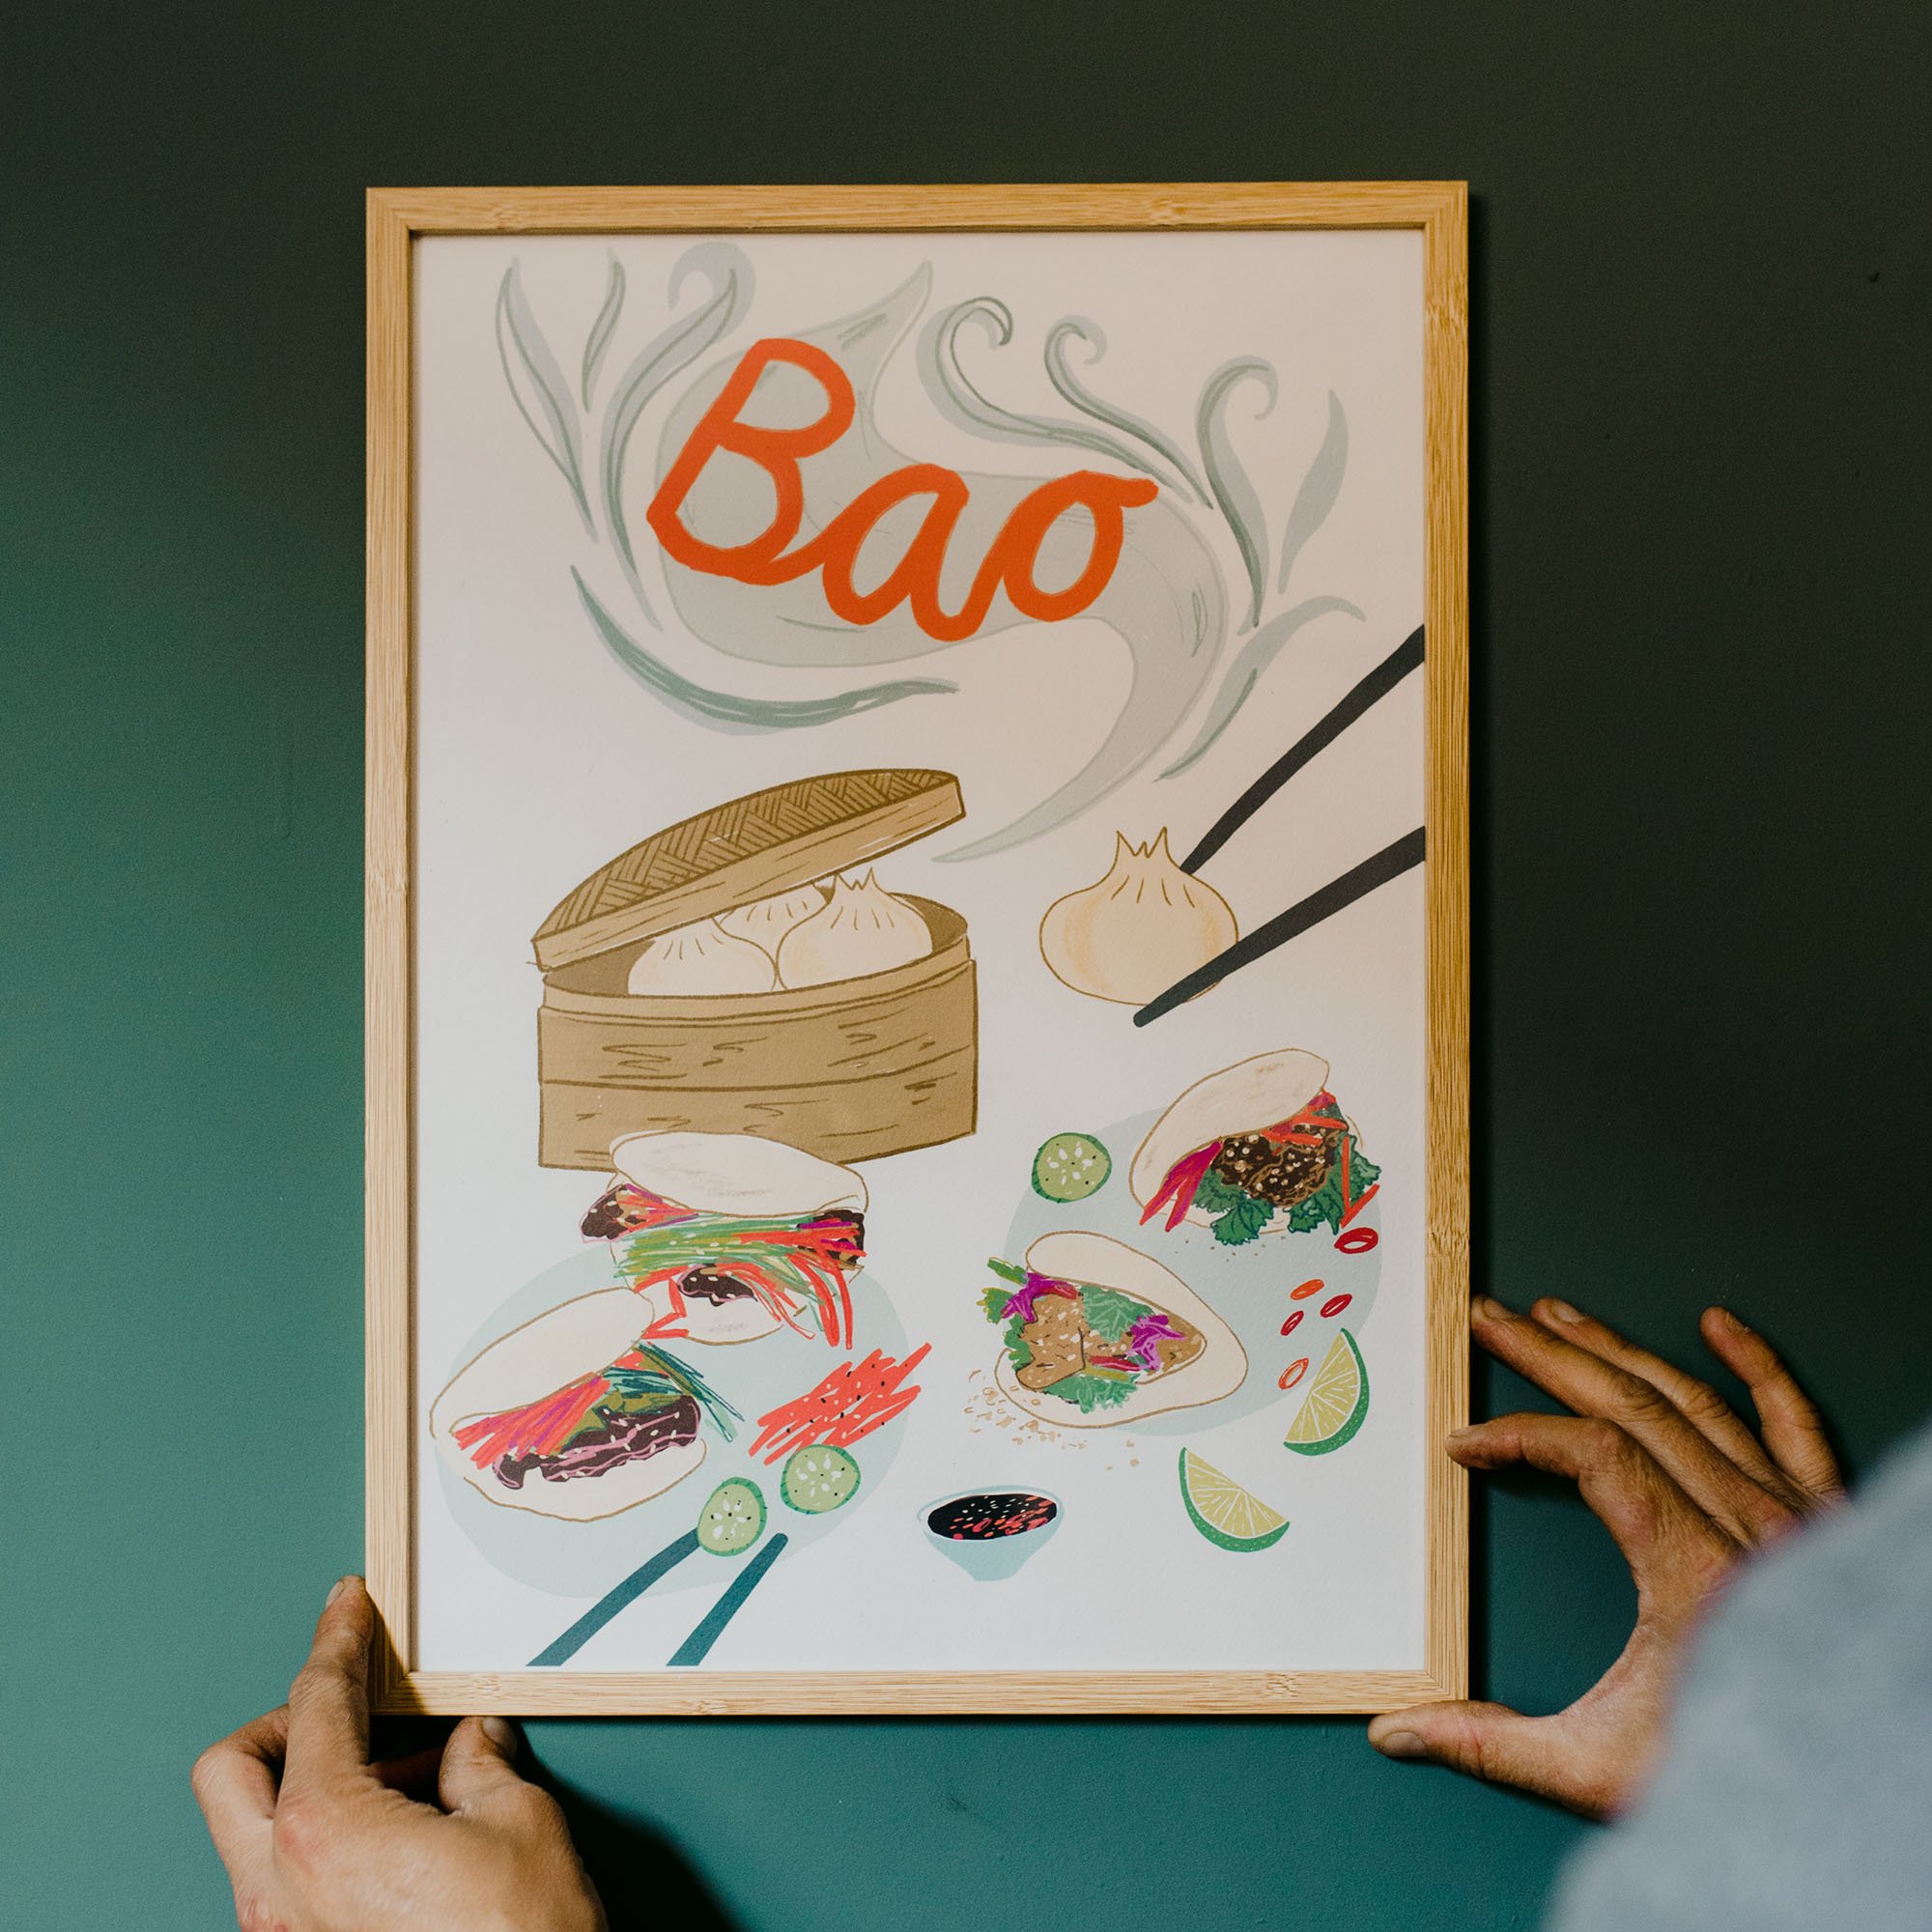 Bao Art Print - Bao, A4